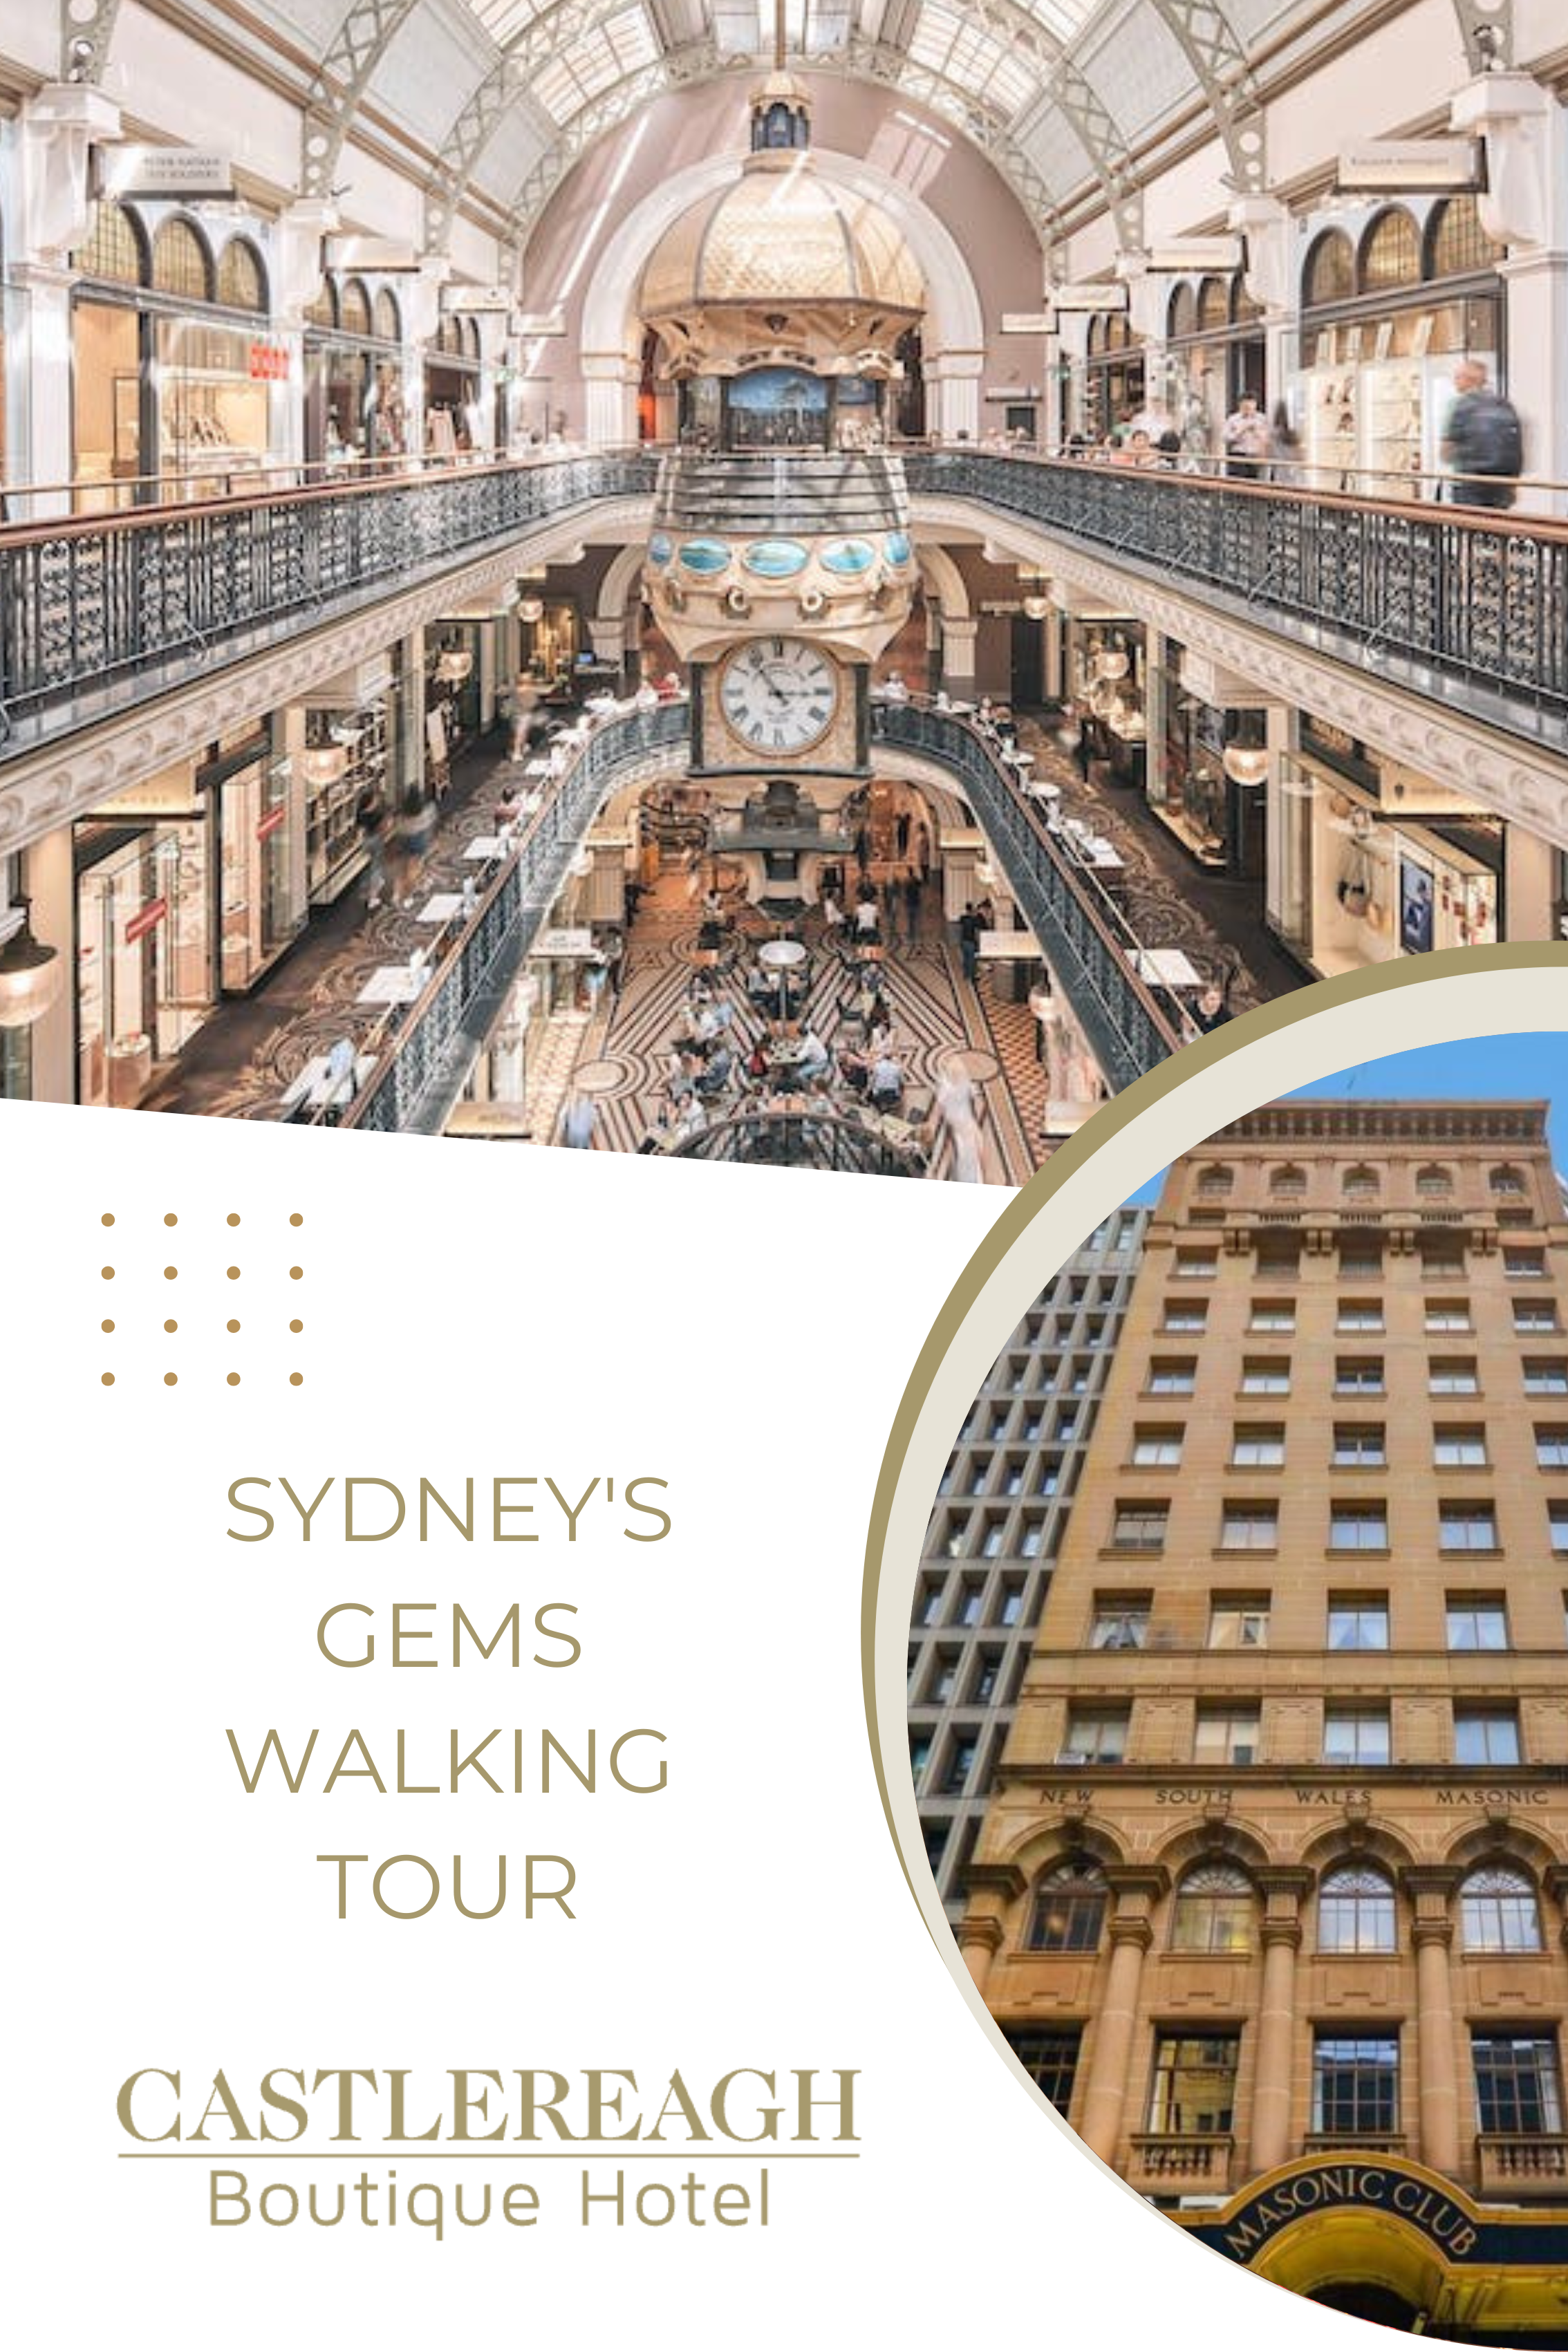 Sydney's Gems Walking Tour with Castlereagh Boutique Hotel